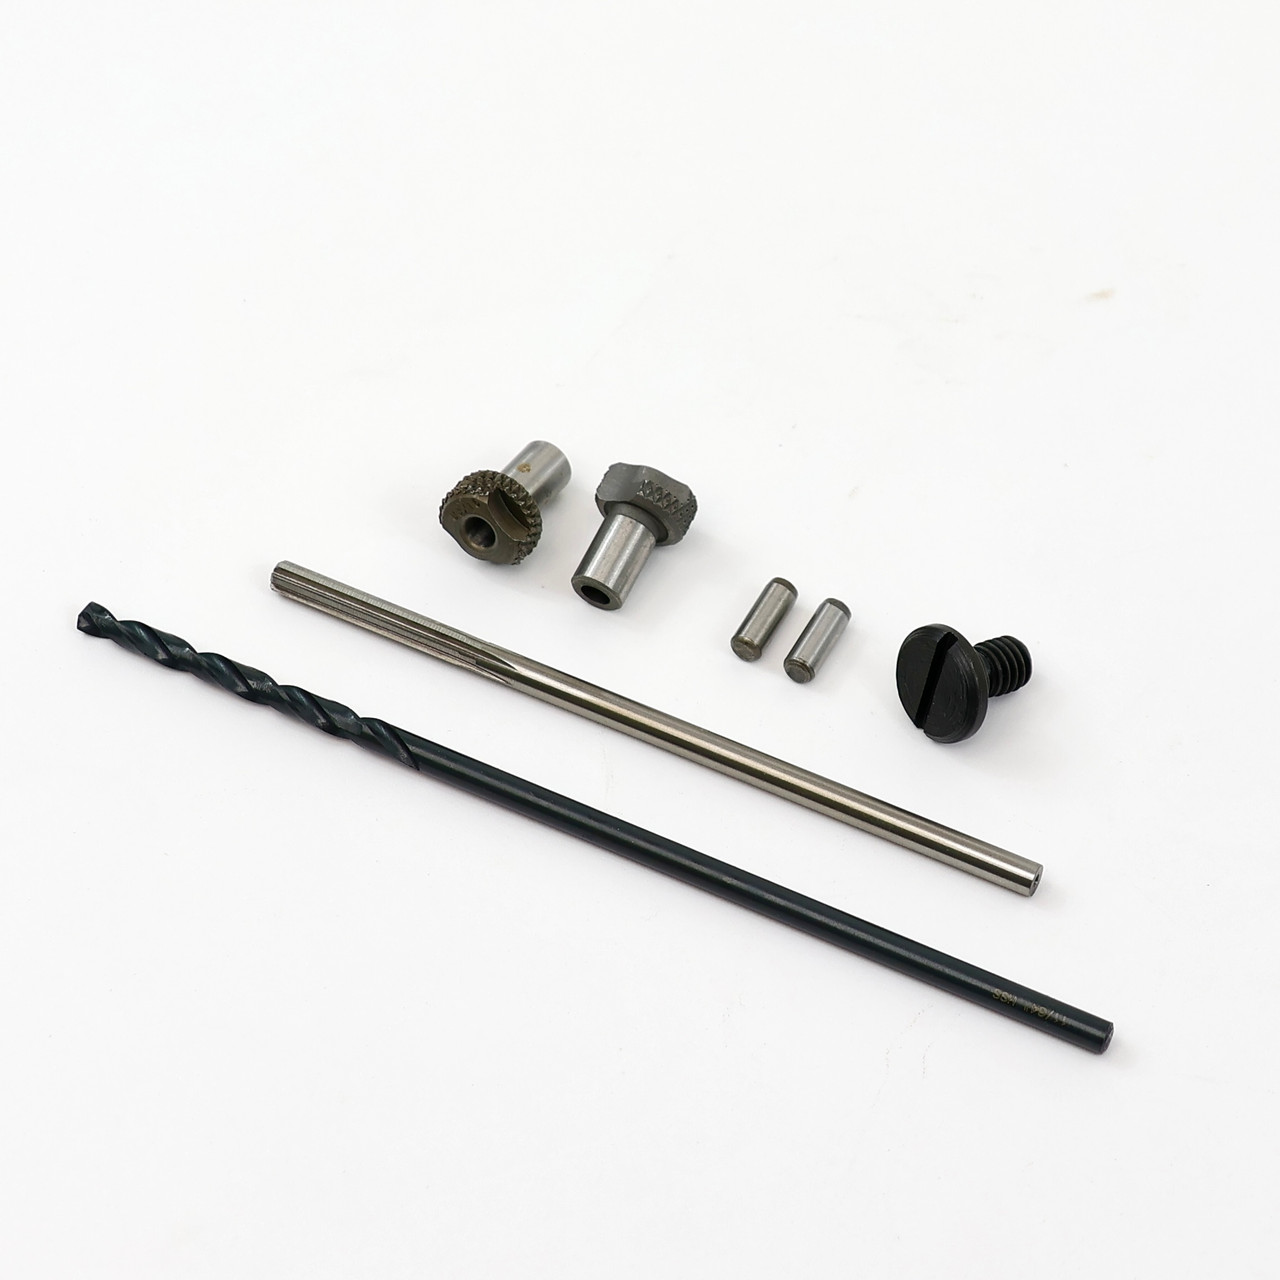 ATI Crankshaft Pin Drill Fixture Kit for LS Engines 918993 Crank Pinning Tool